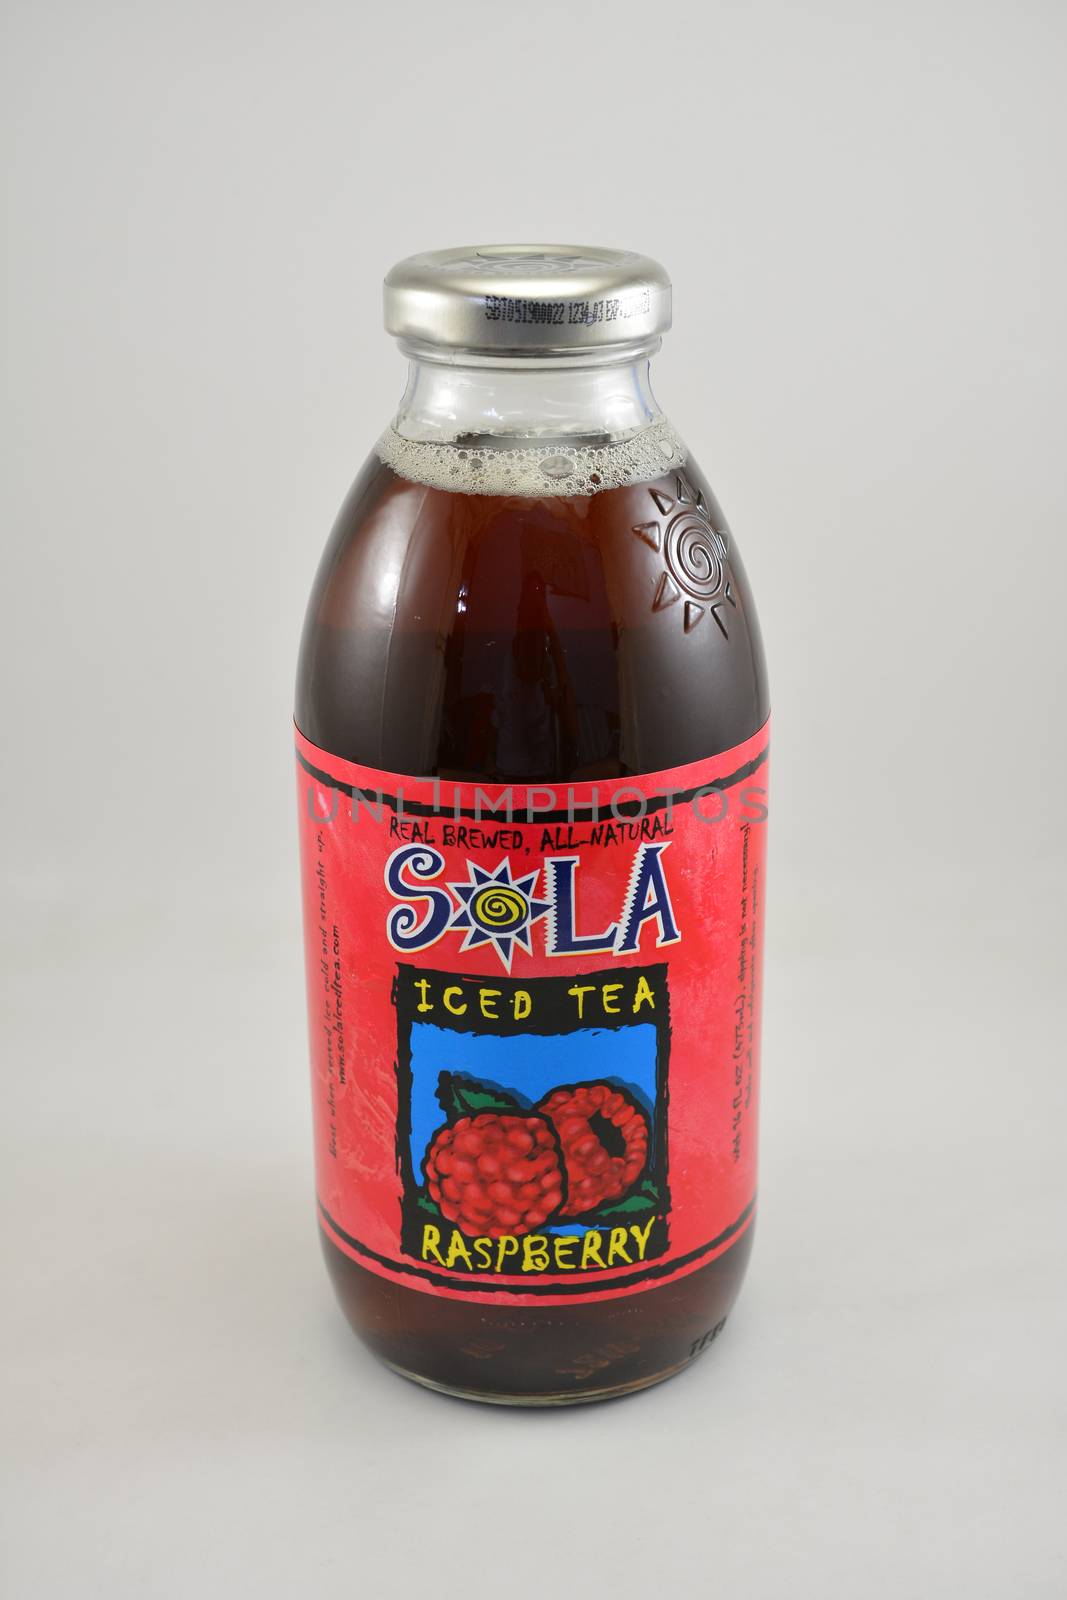 Sola iced tea raspberry in Manila, Philippines by imwaltersy